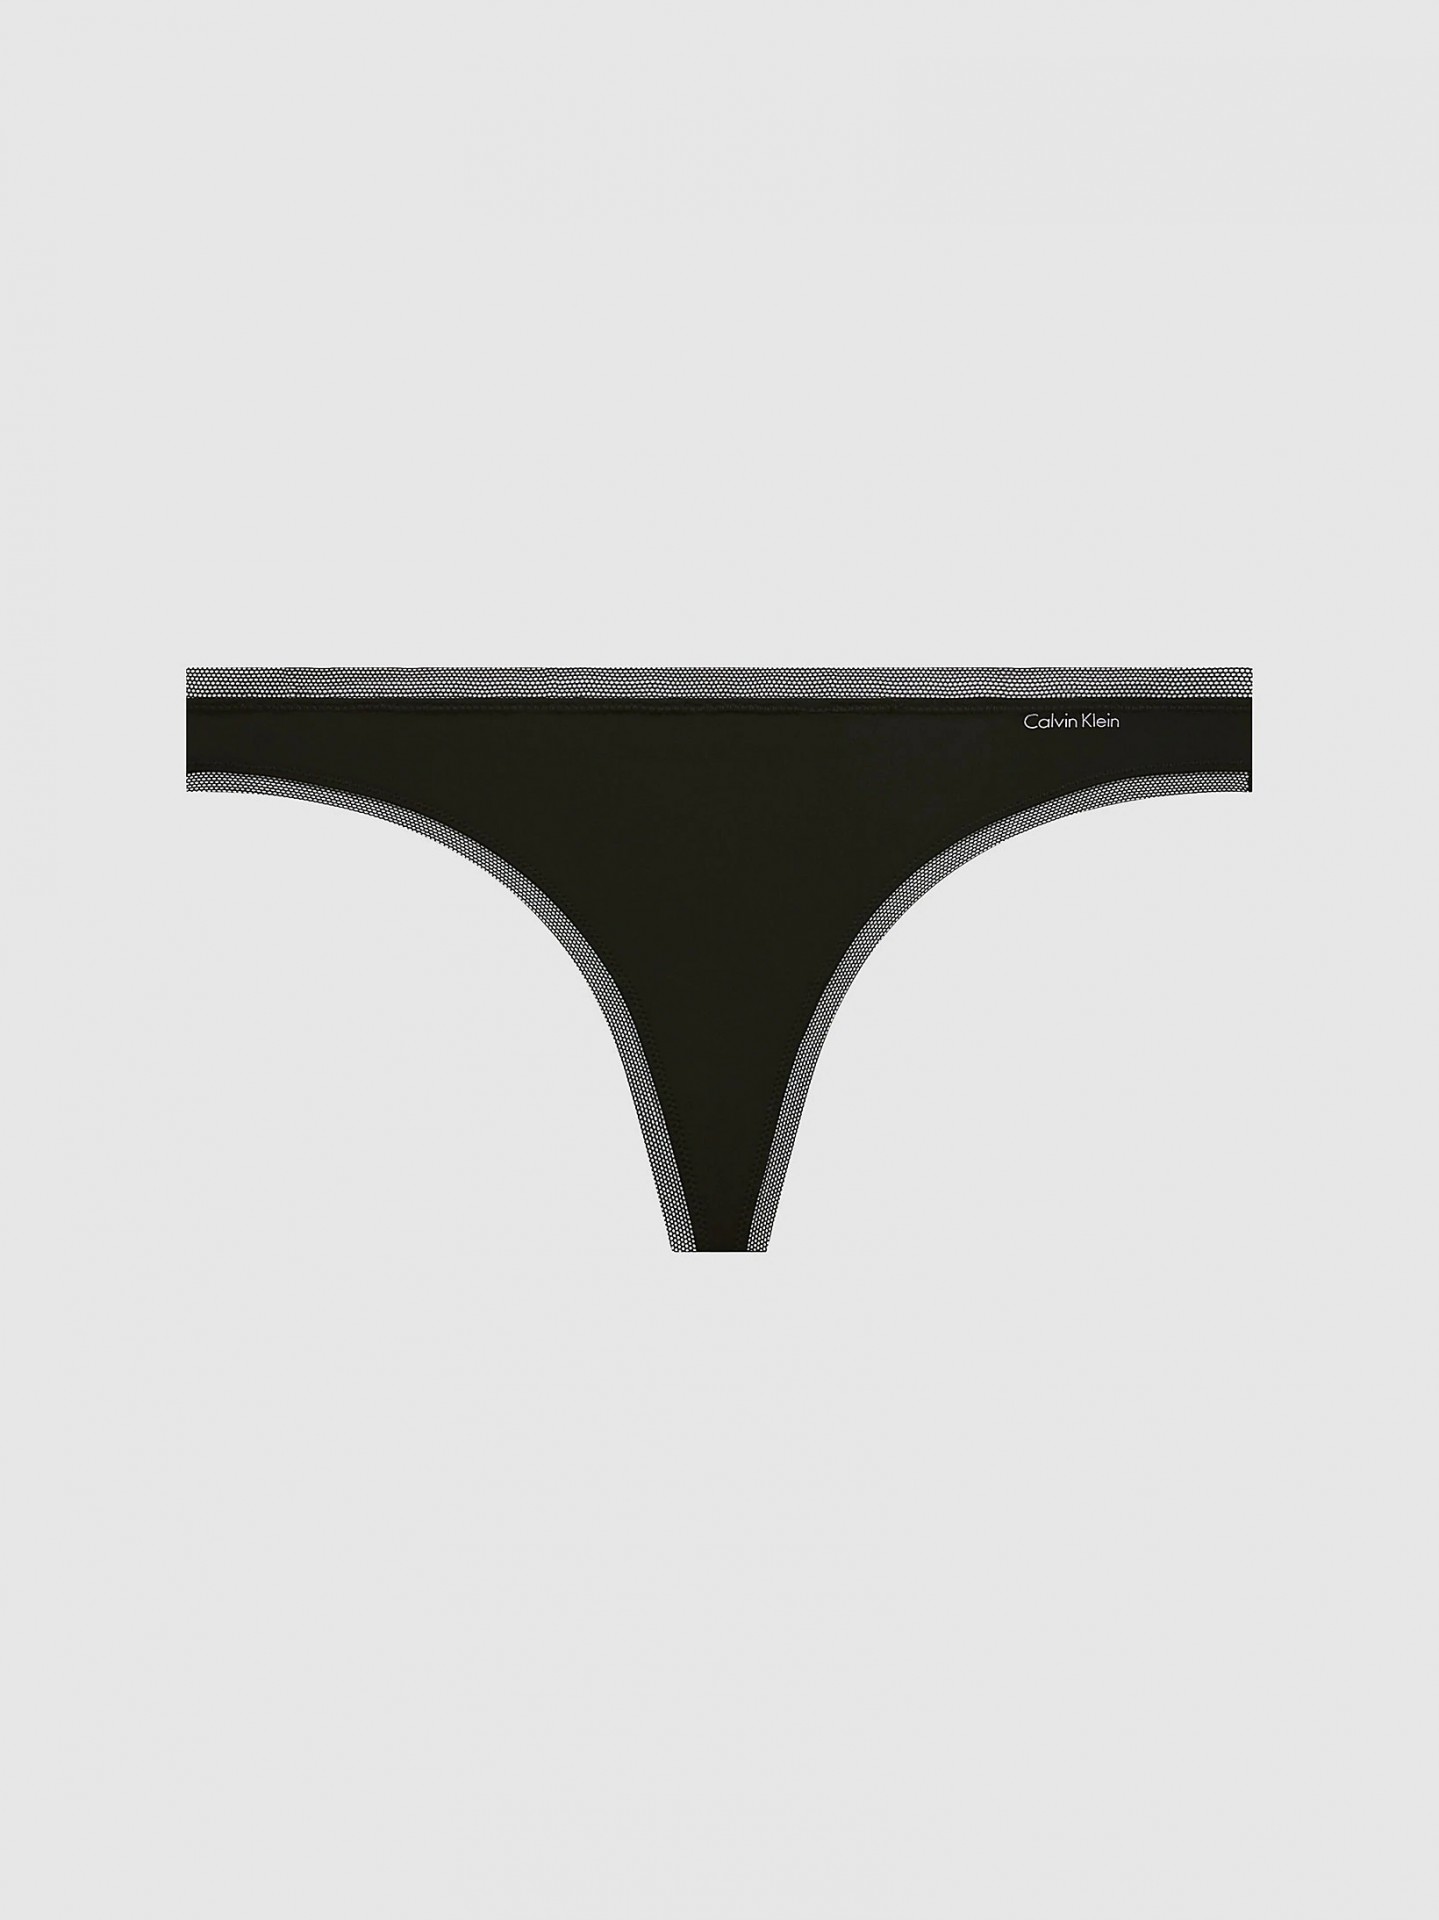 Tanga Calvin Klein (QF1666E-02), Velikost S, Barva černá